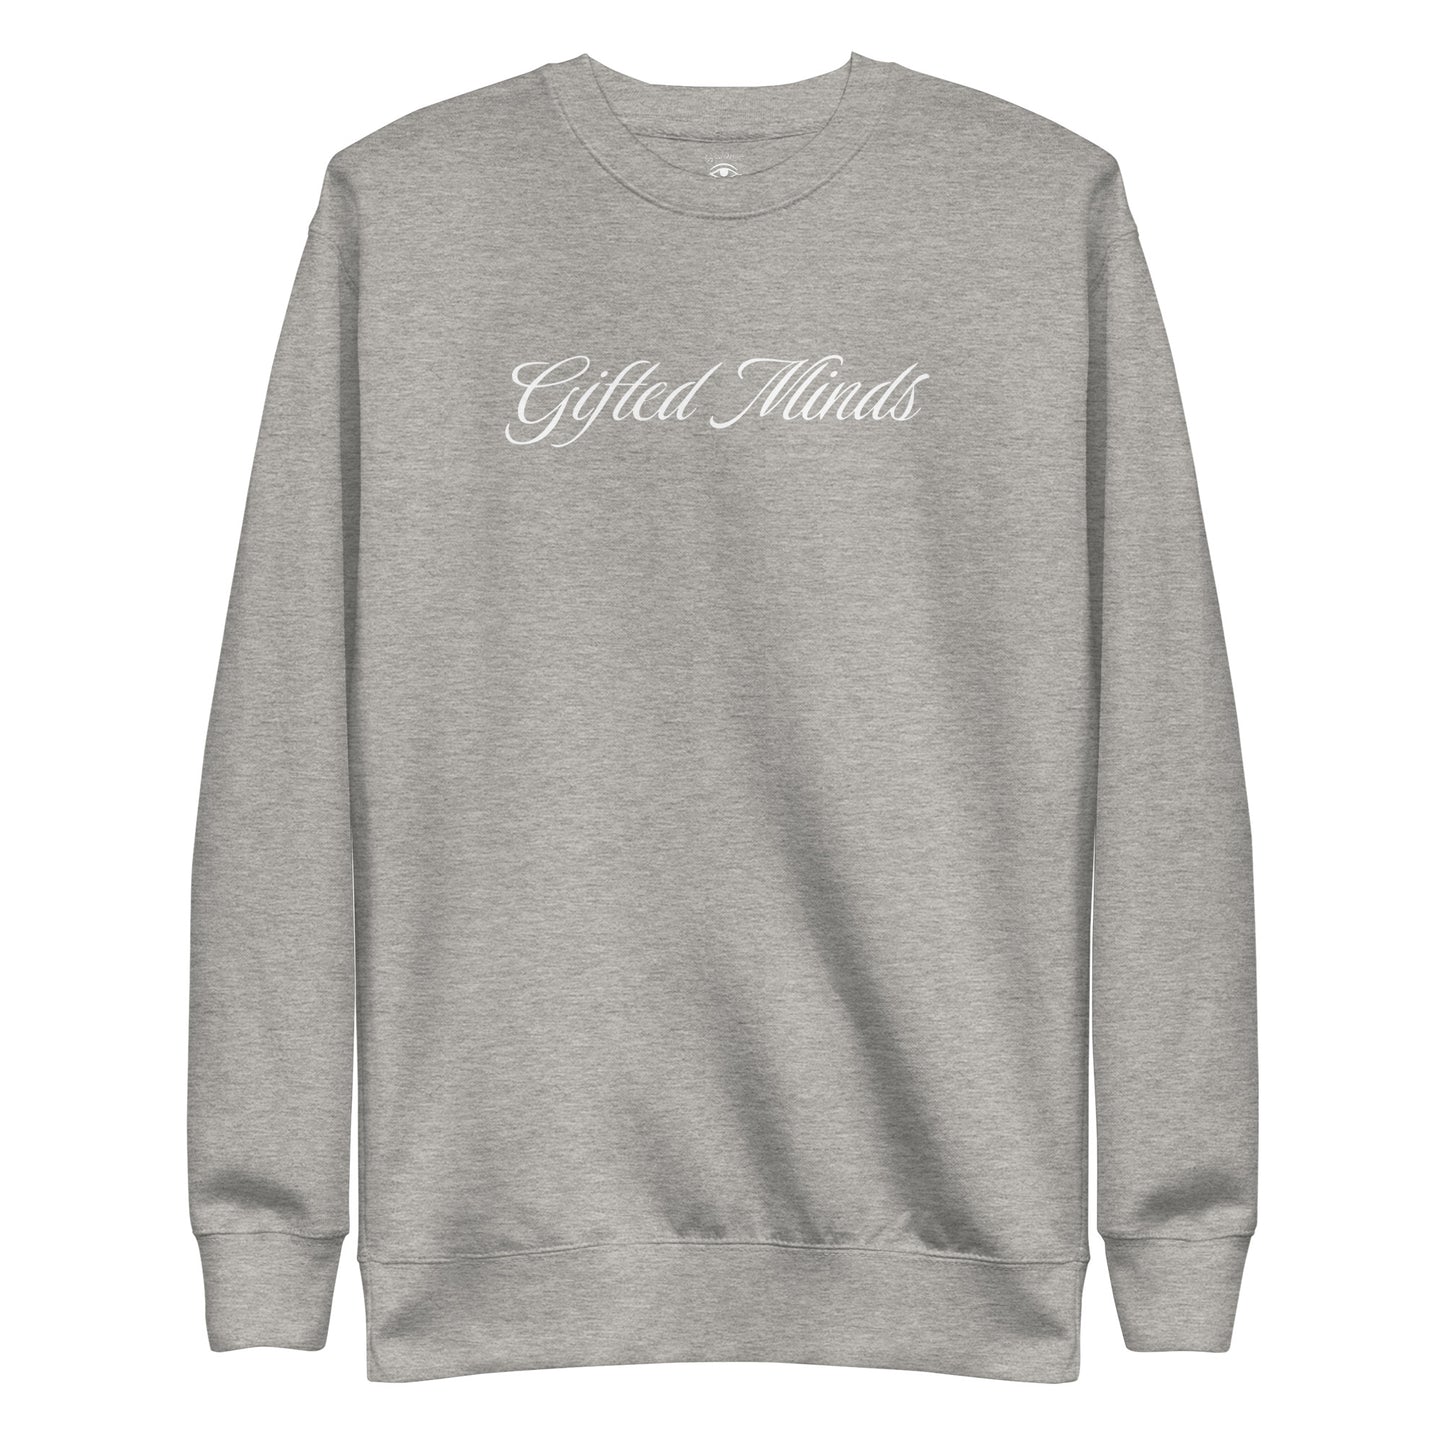 God's Fortune Sweatshirt - GFTD MNDS